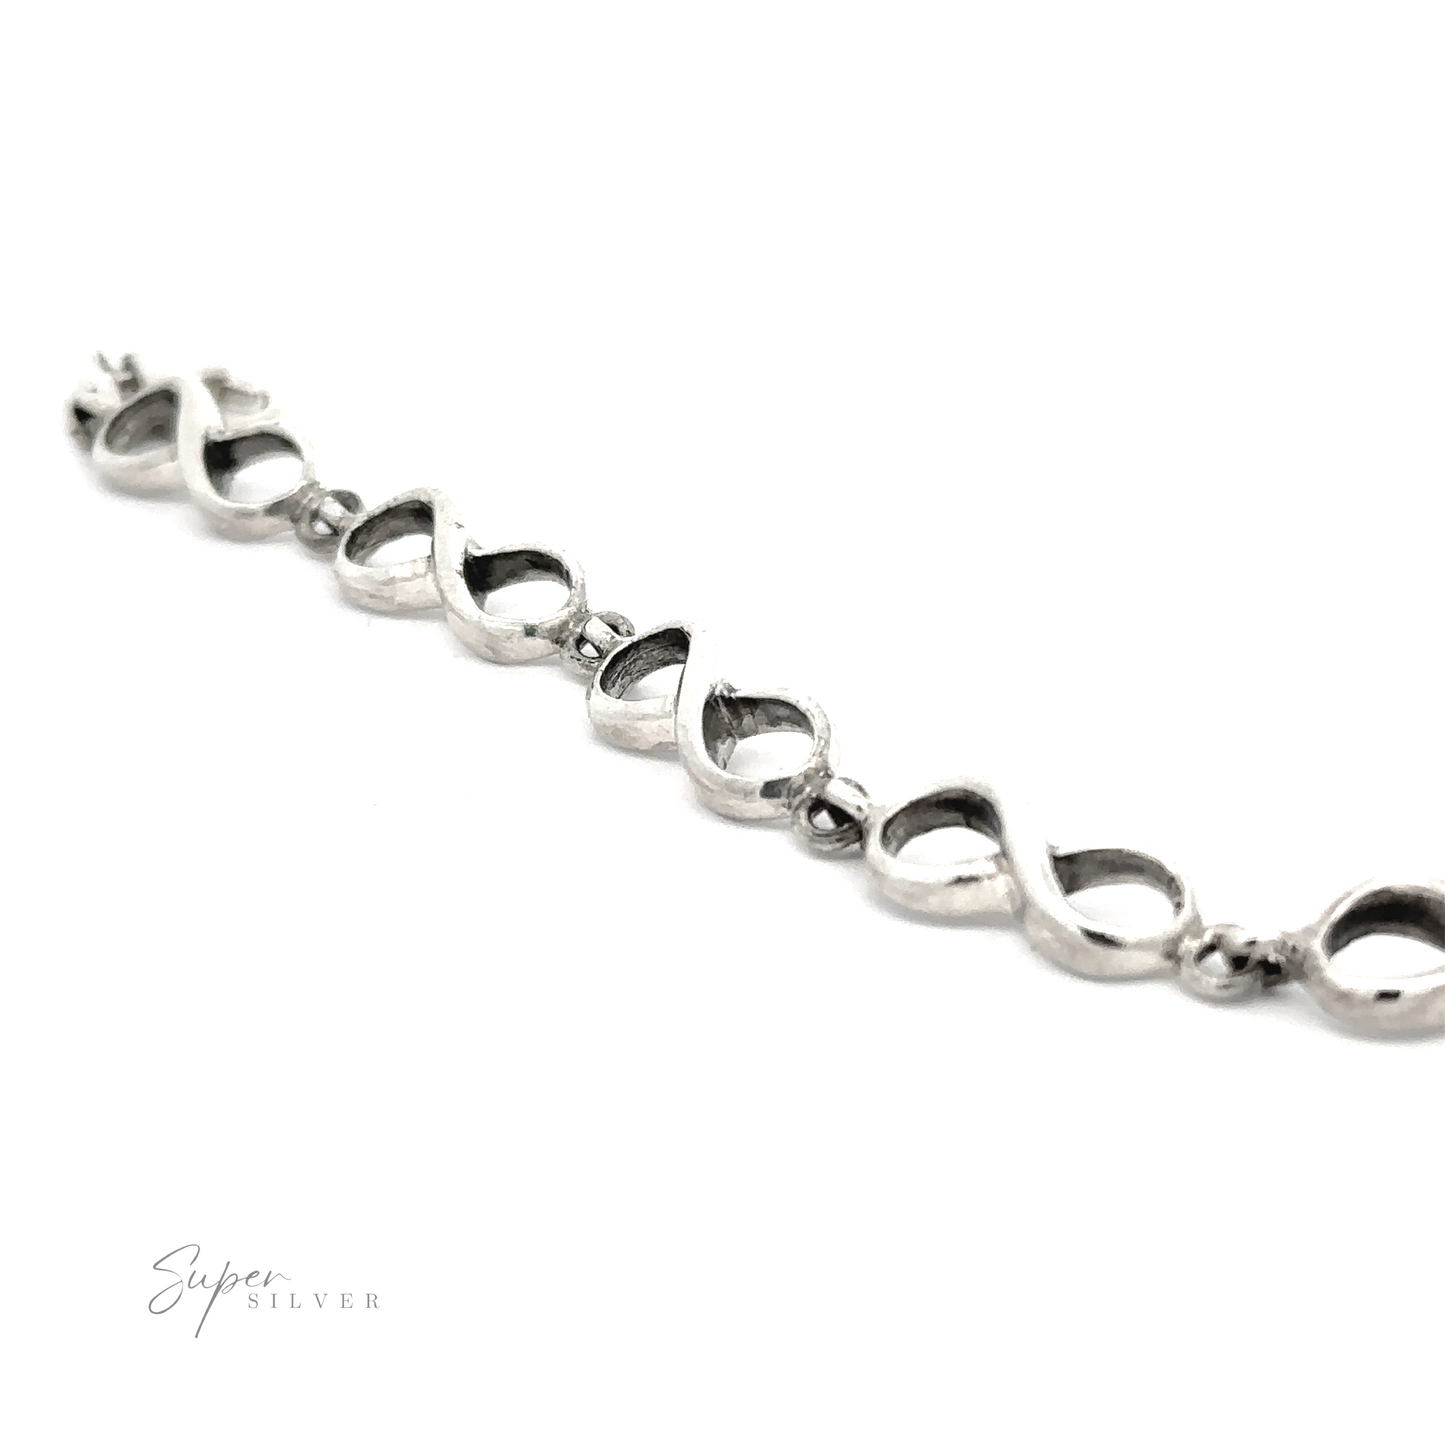 A sleek silver Infinity Sign Link Bracelet representing interconnectedness.